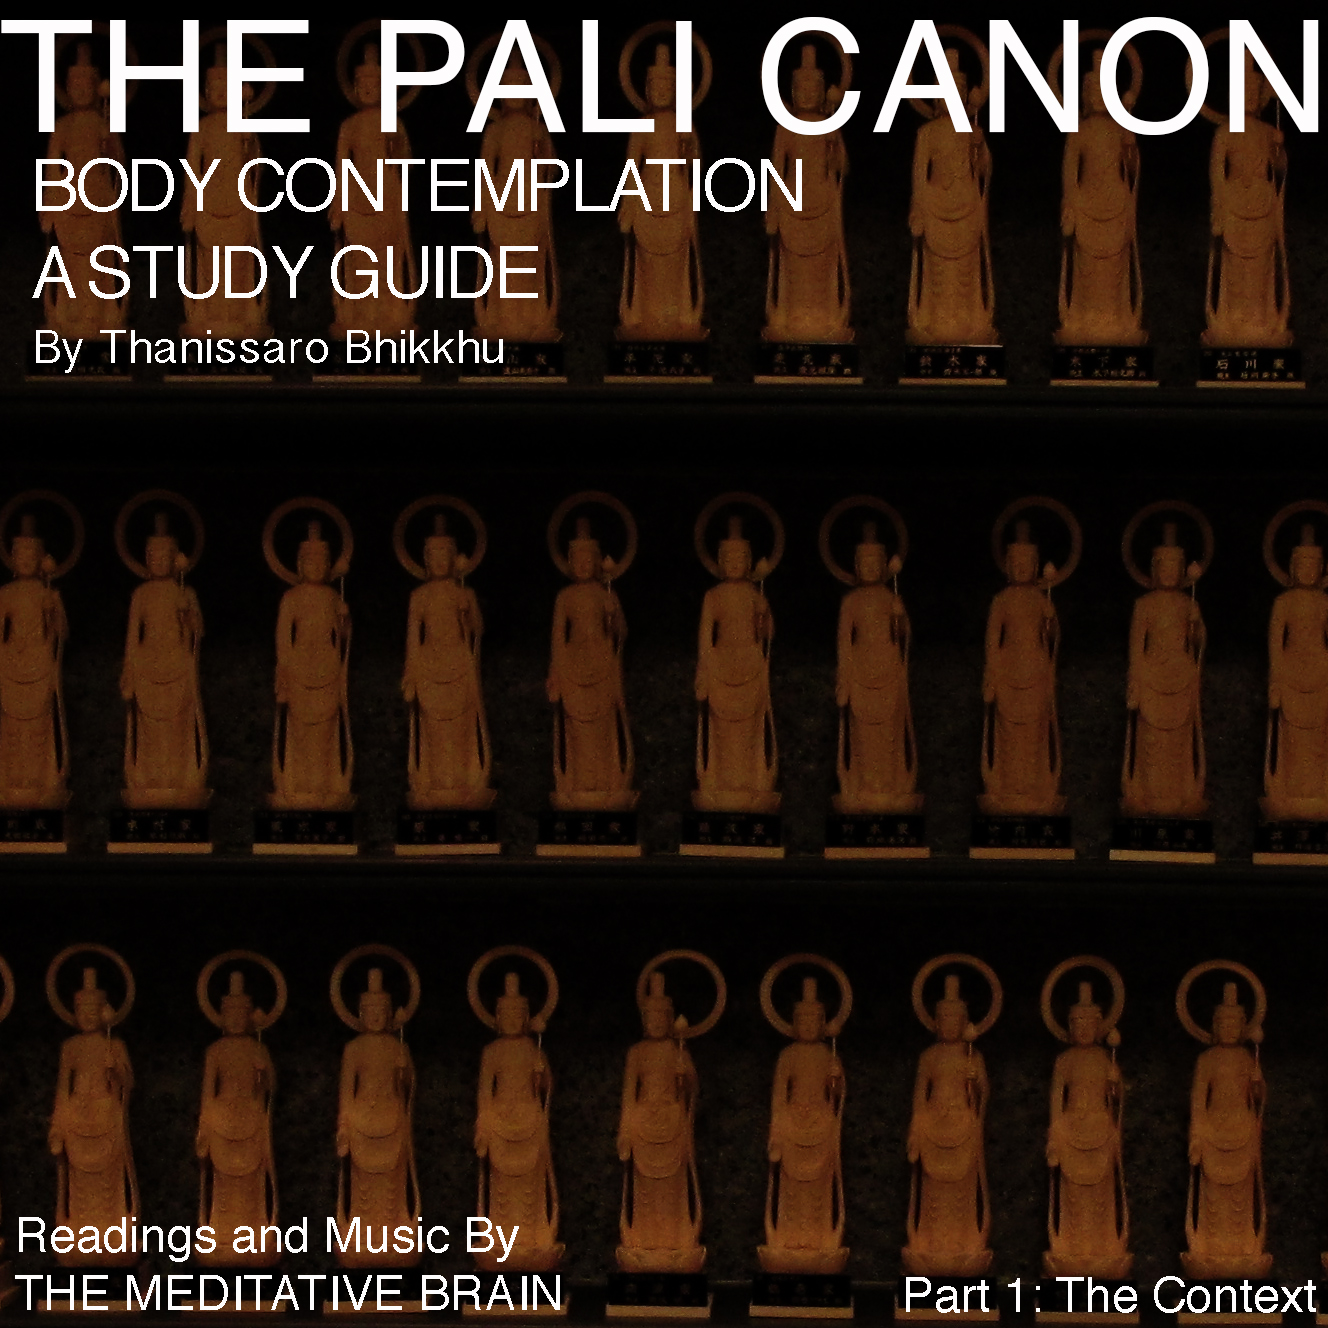 I created free audio recordings of the Pali Canon